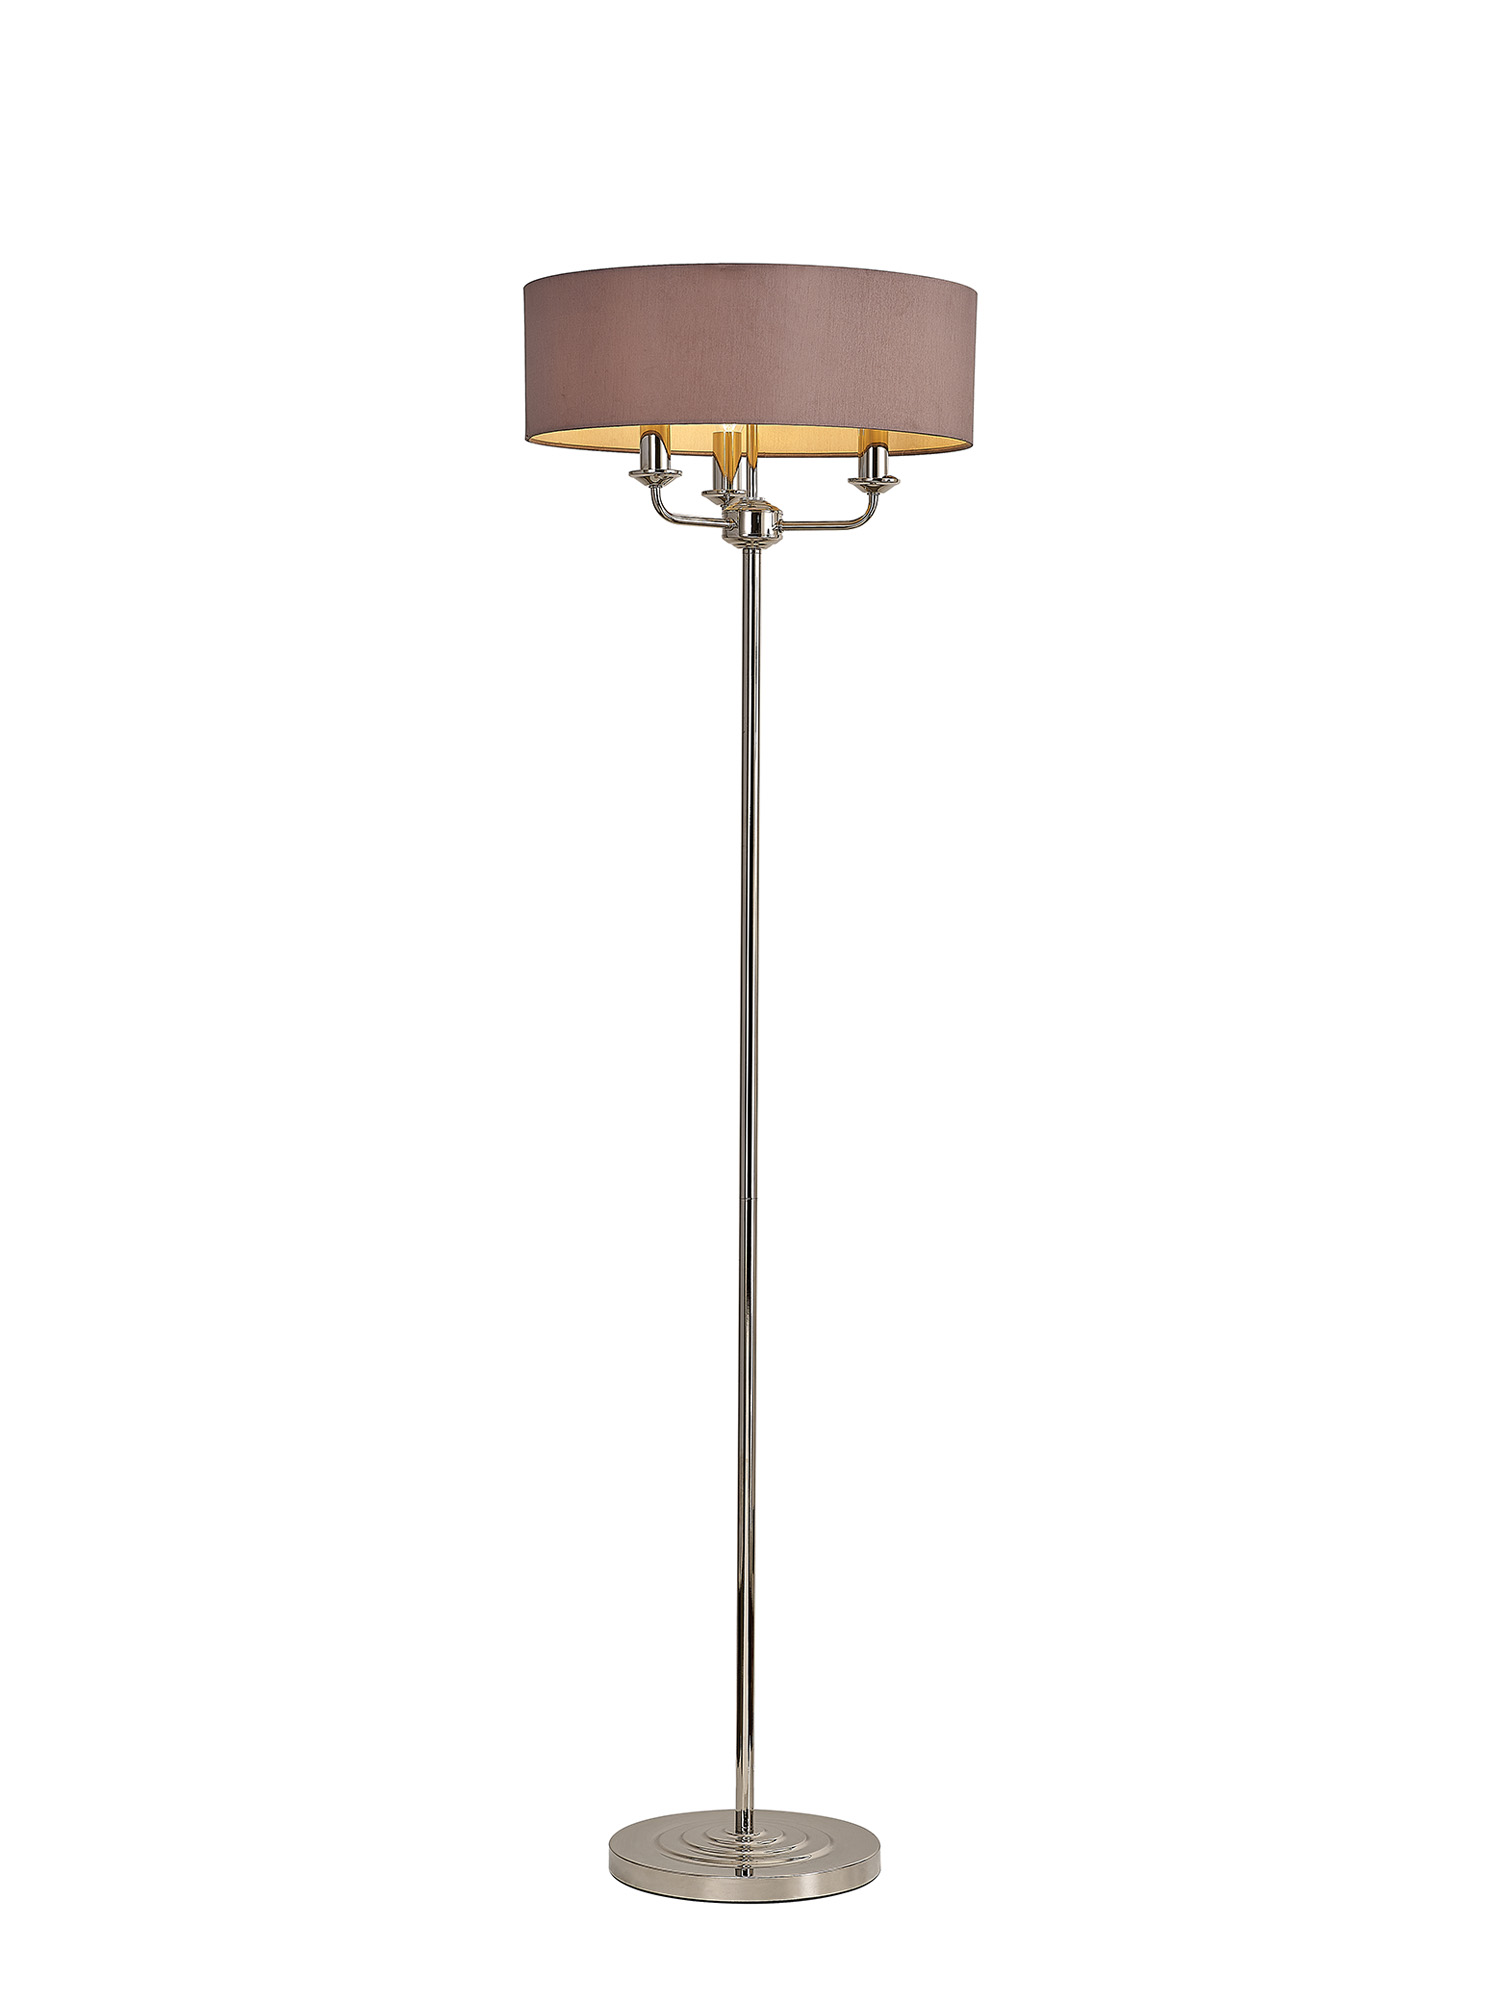 DK0886  Banyan 45cm 3 Light Floor Lamp Polished Nickel; Taupe